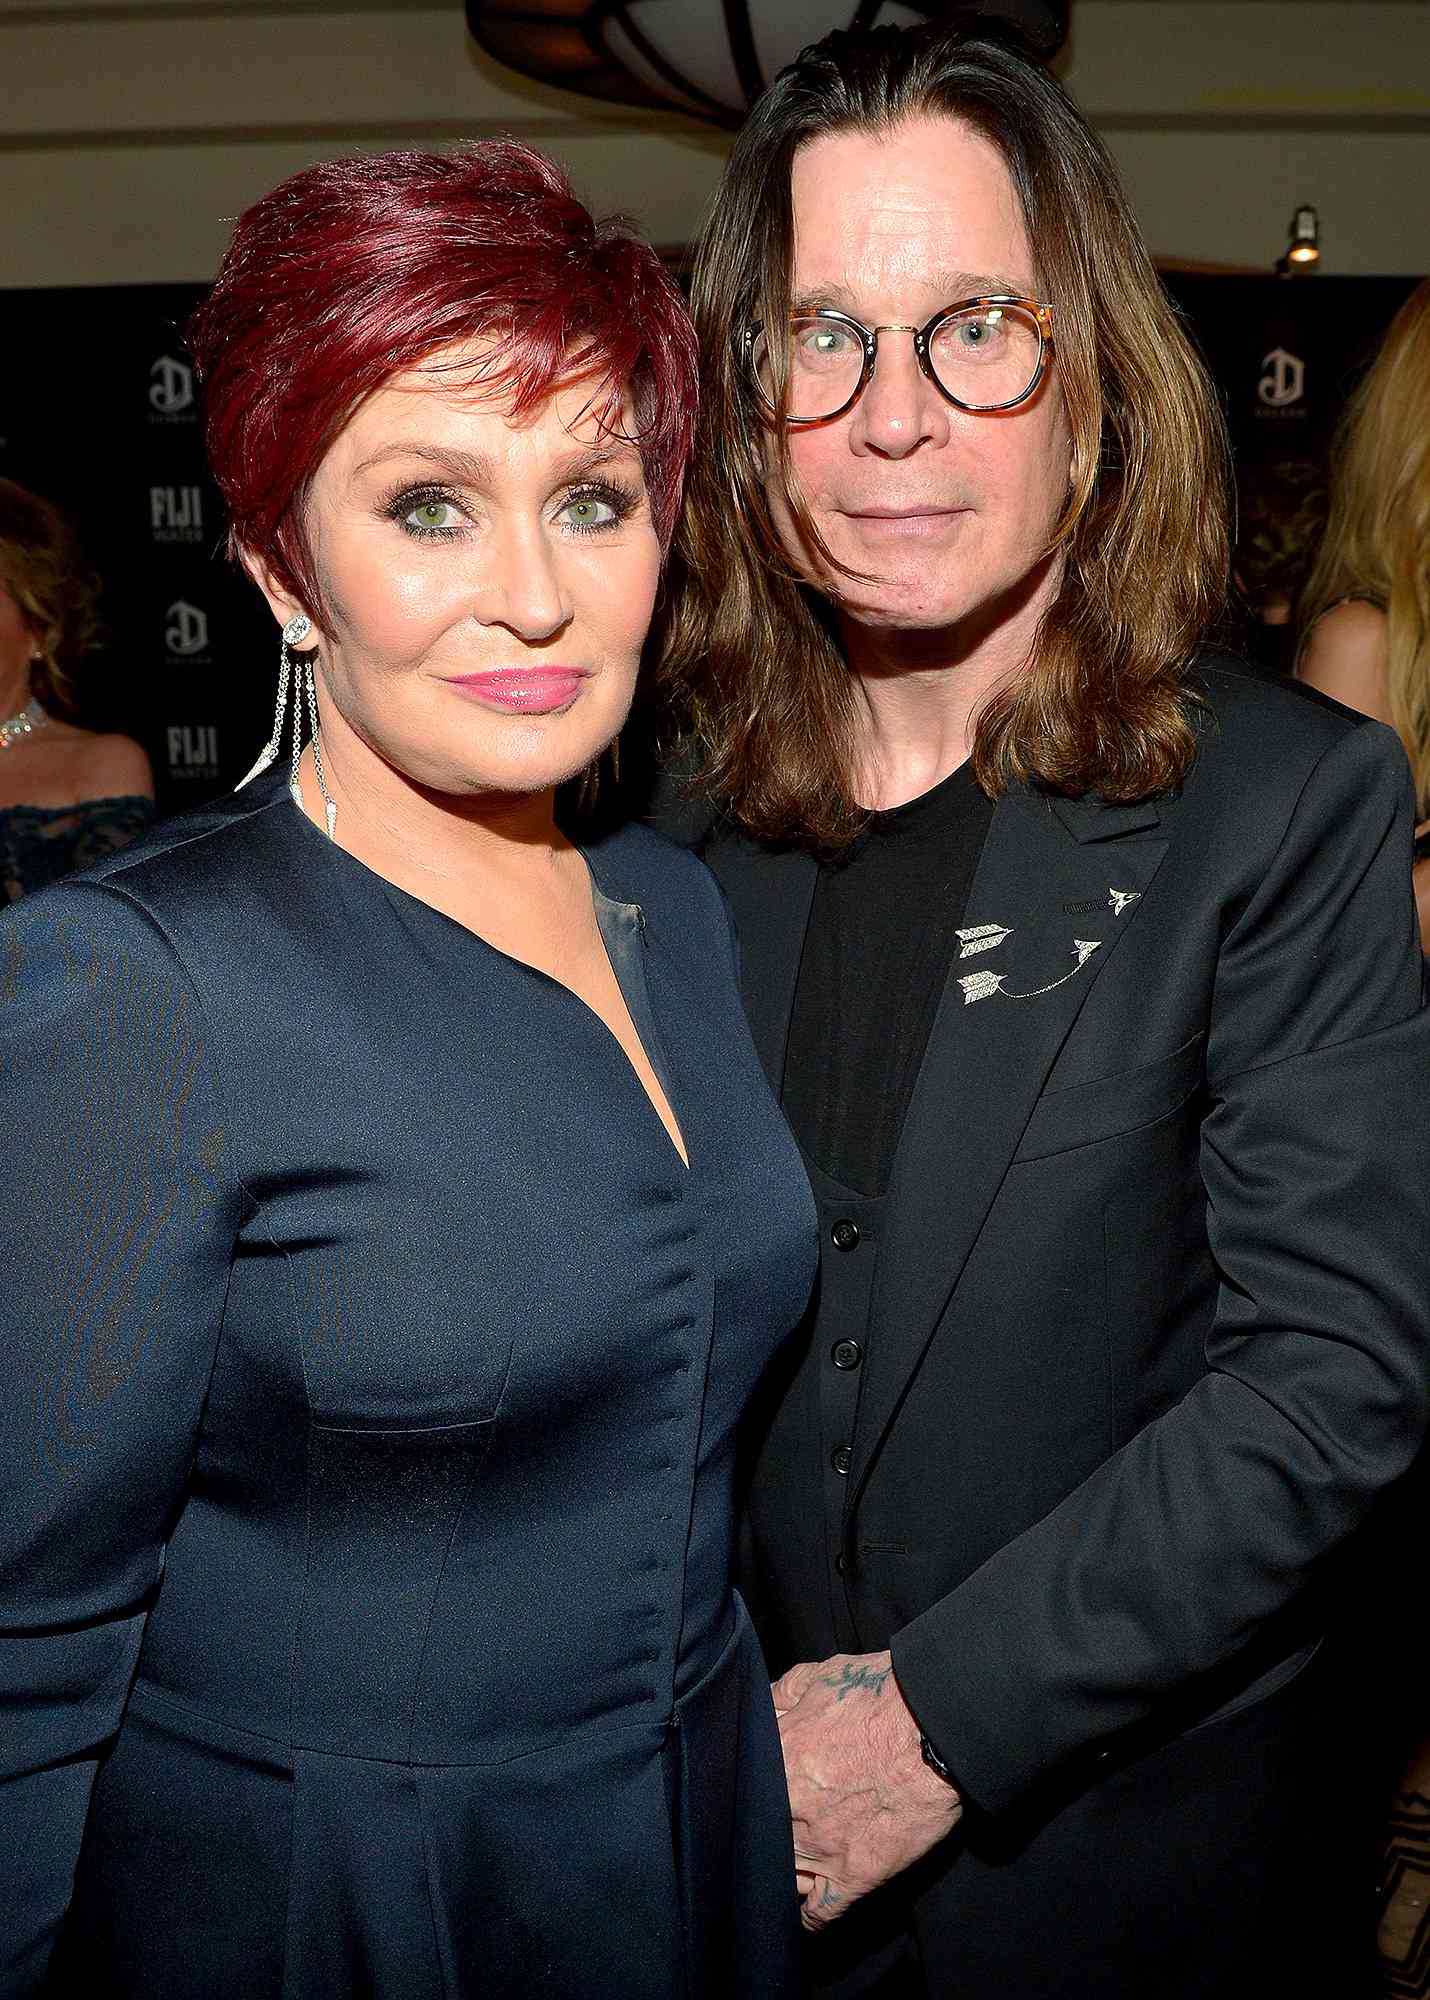    Ozzy Osbourne comsexy, mulher Sharon Osbourne 